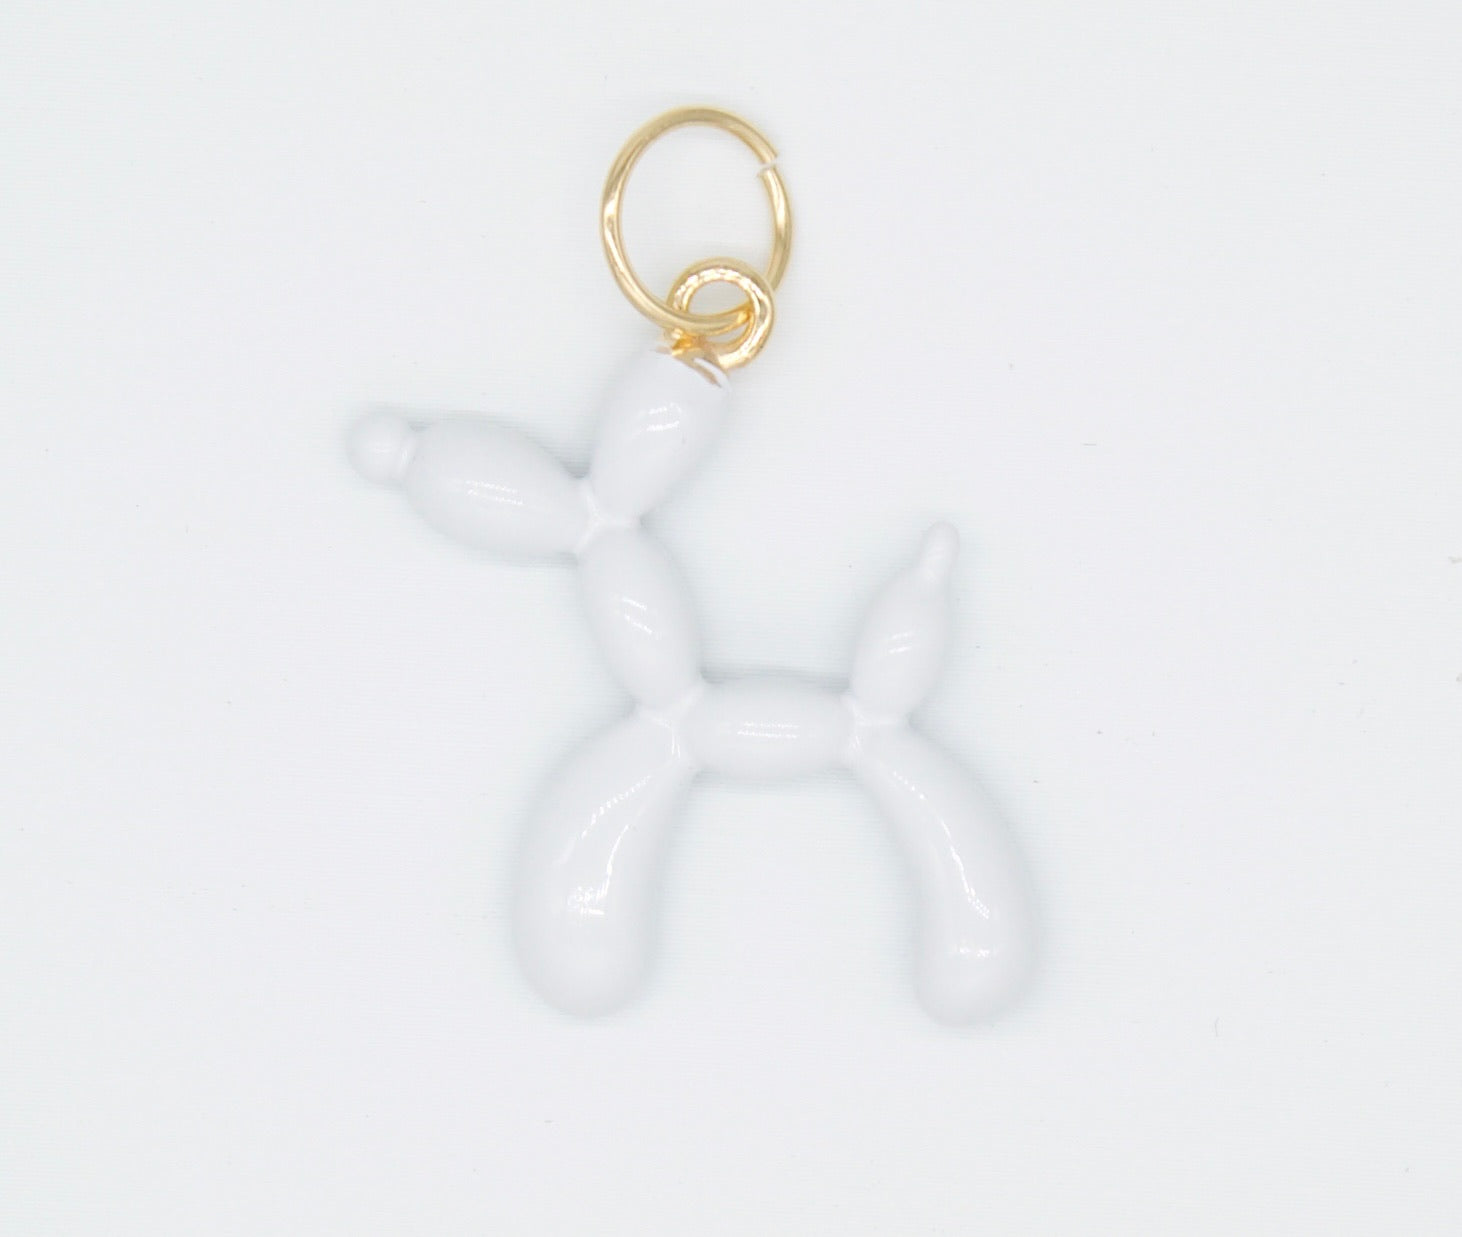 18k Gold Filled Enamel Dog Balloon Animal Pendant (A44)